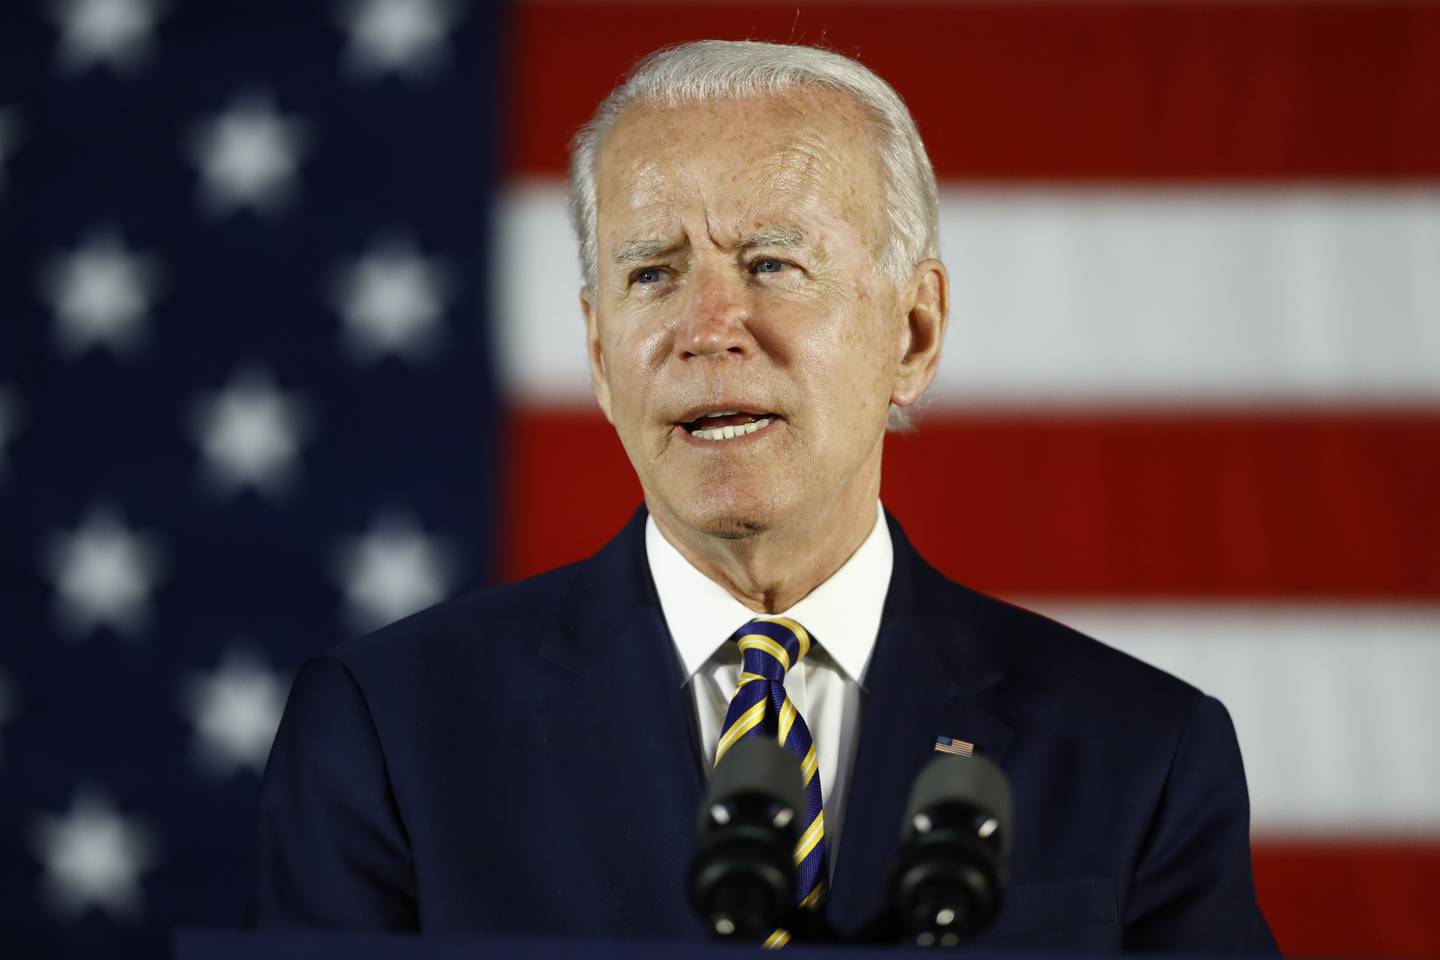 In this June 17, 2020, file photo, Democratic presidential candidate, former Vice President Joe Biden speaks in Darby, Pa.